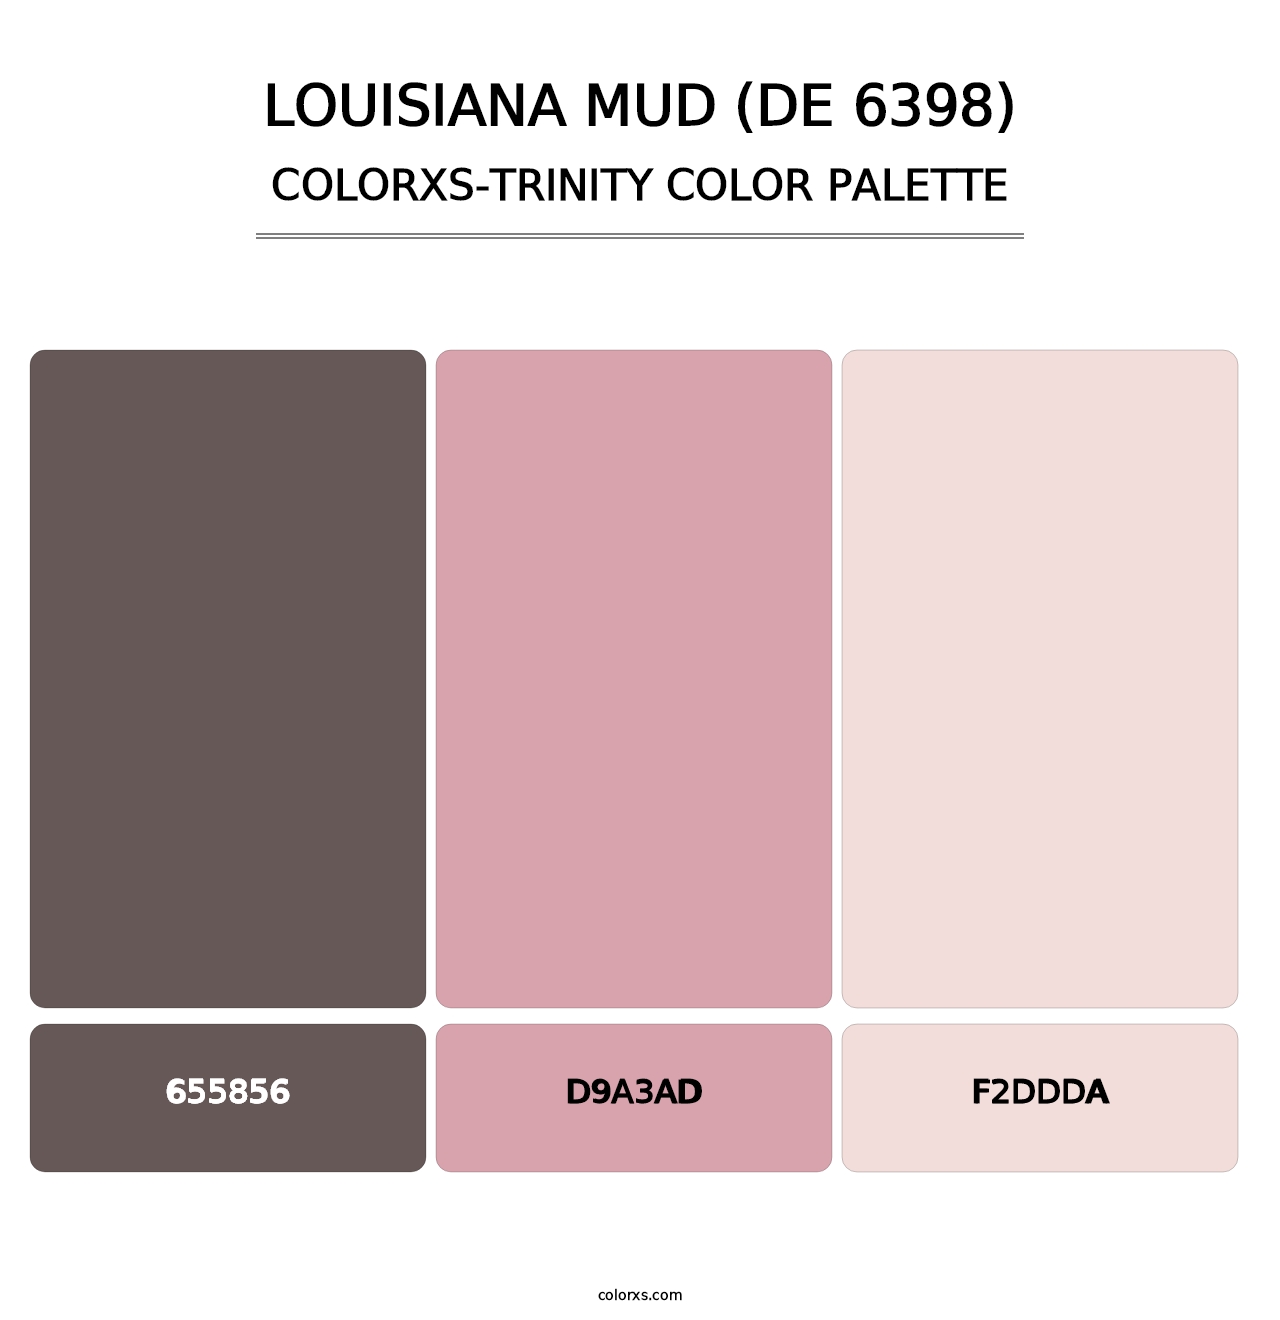 Louisiana Mud (DE 6398) - Colorxs Trinity Palette